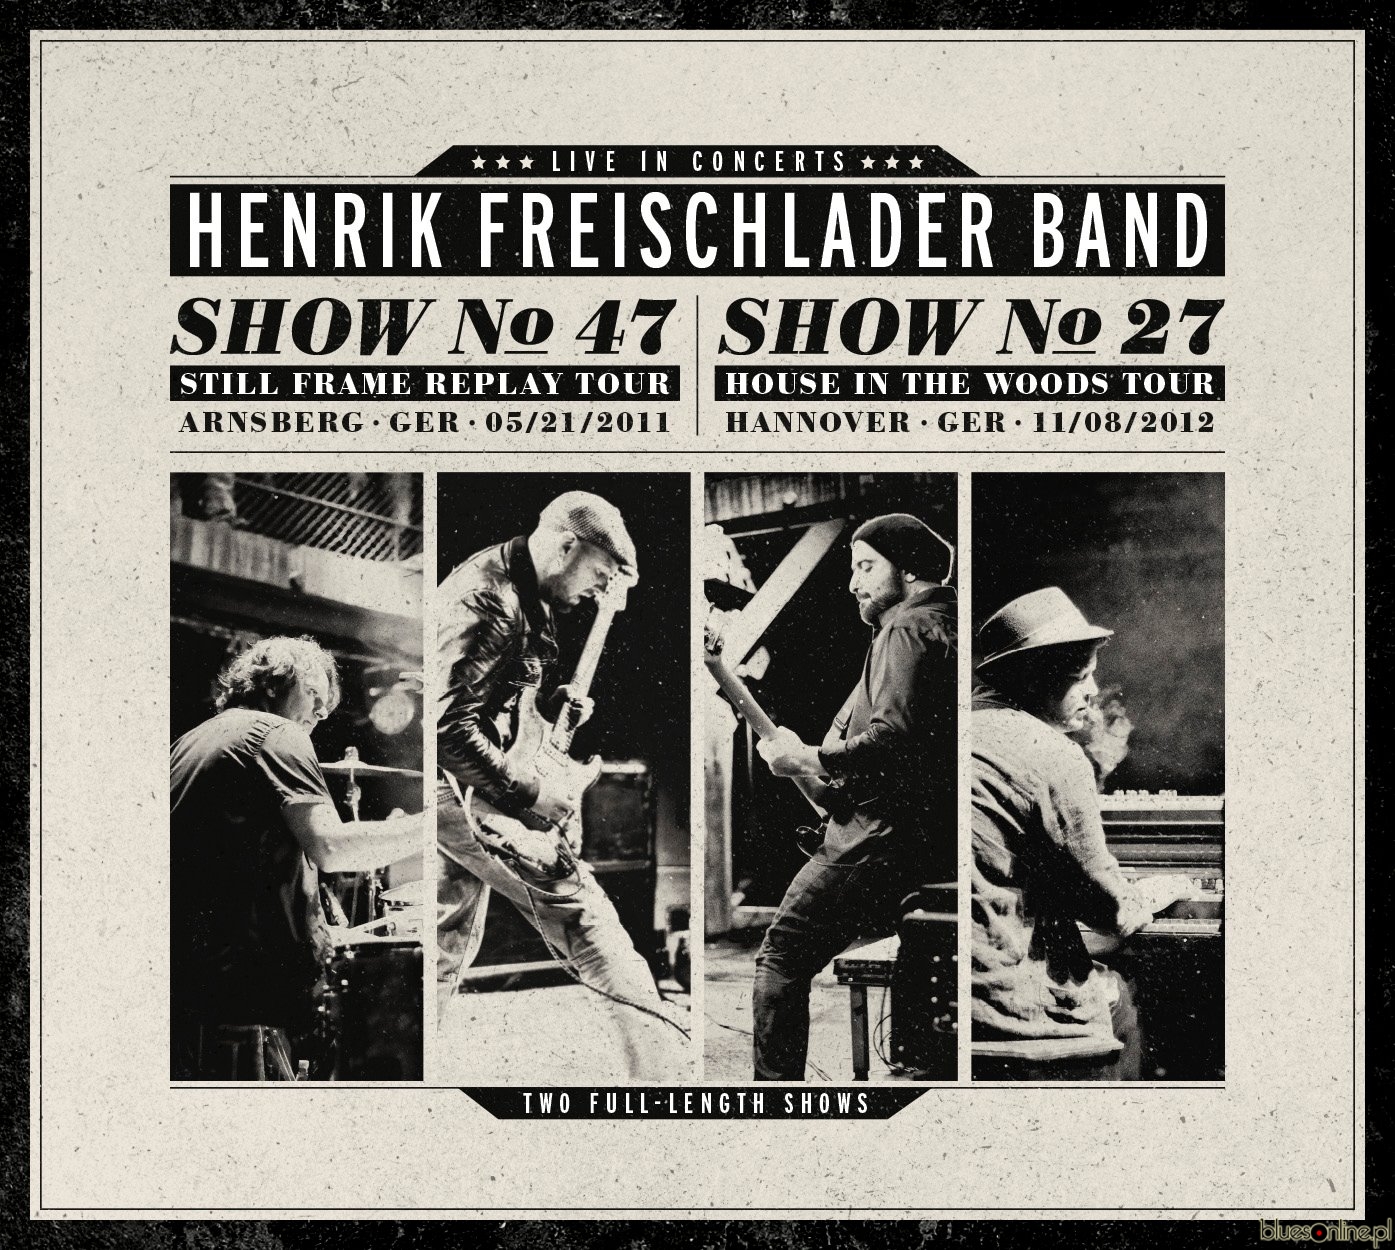 Henrik Freischlader Band – Live in Concerts